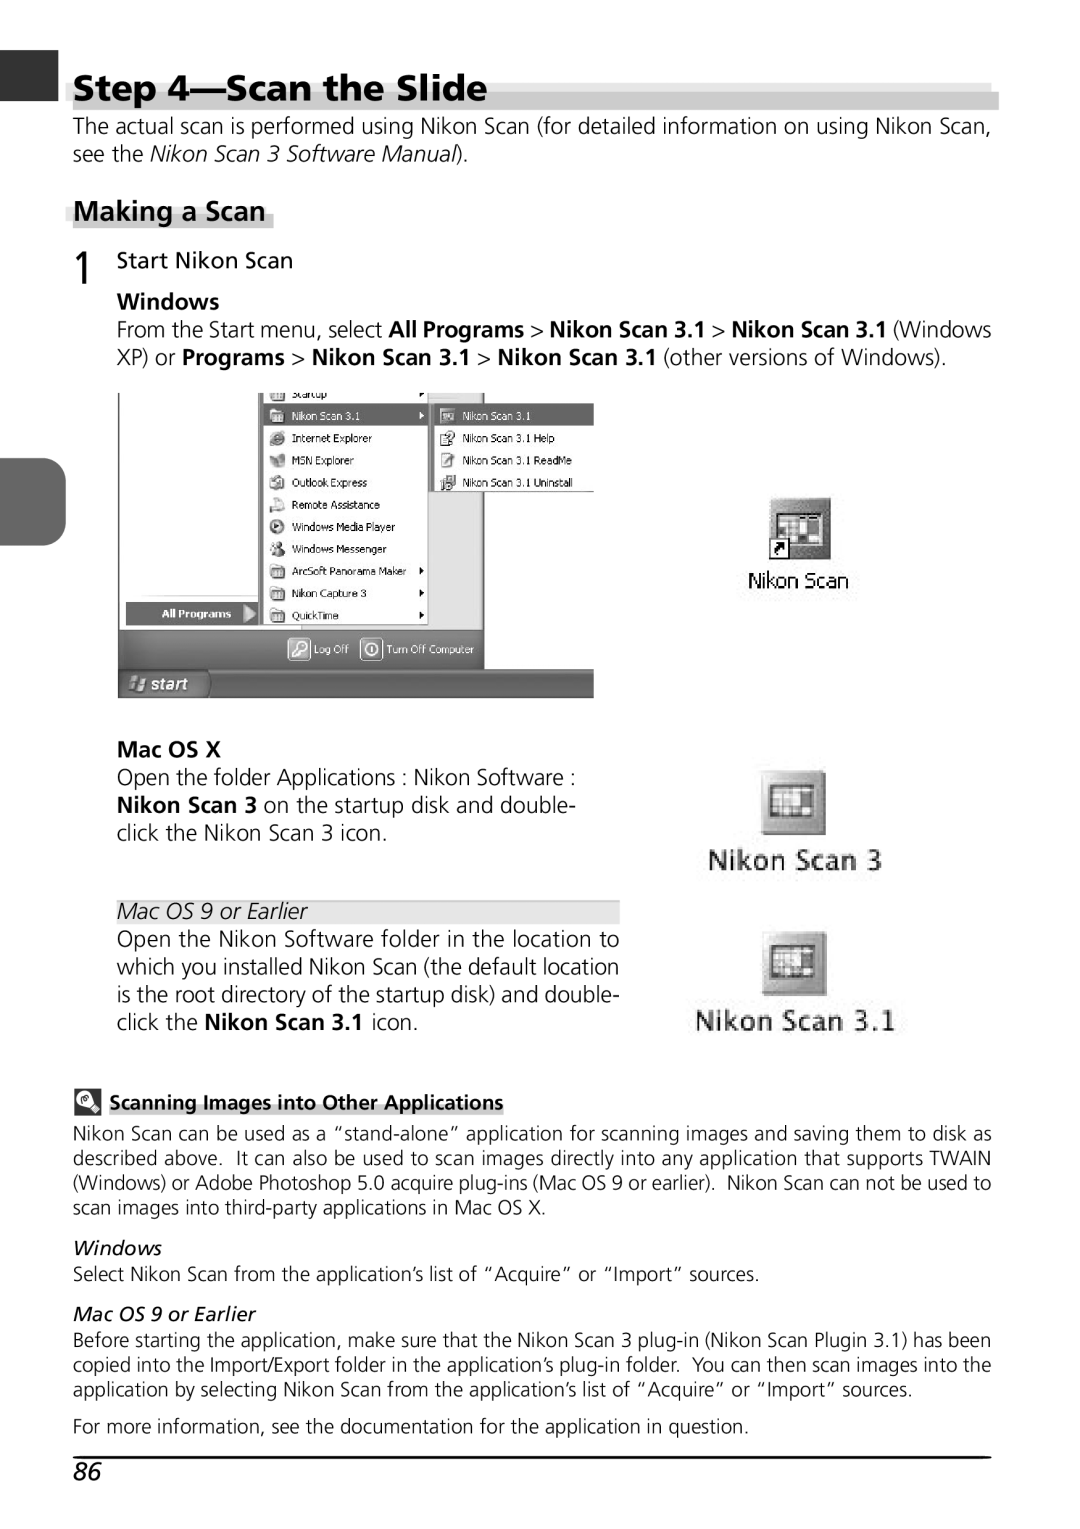 Nikon LS4000 user manual Scan the Slide, Making a Scan, Windows, Mac OS 